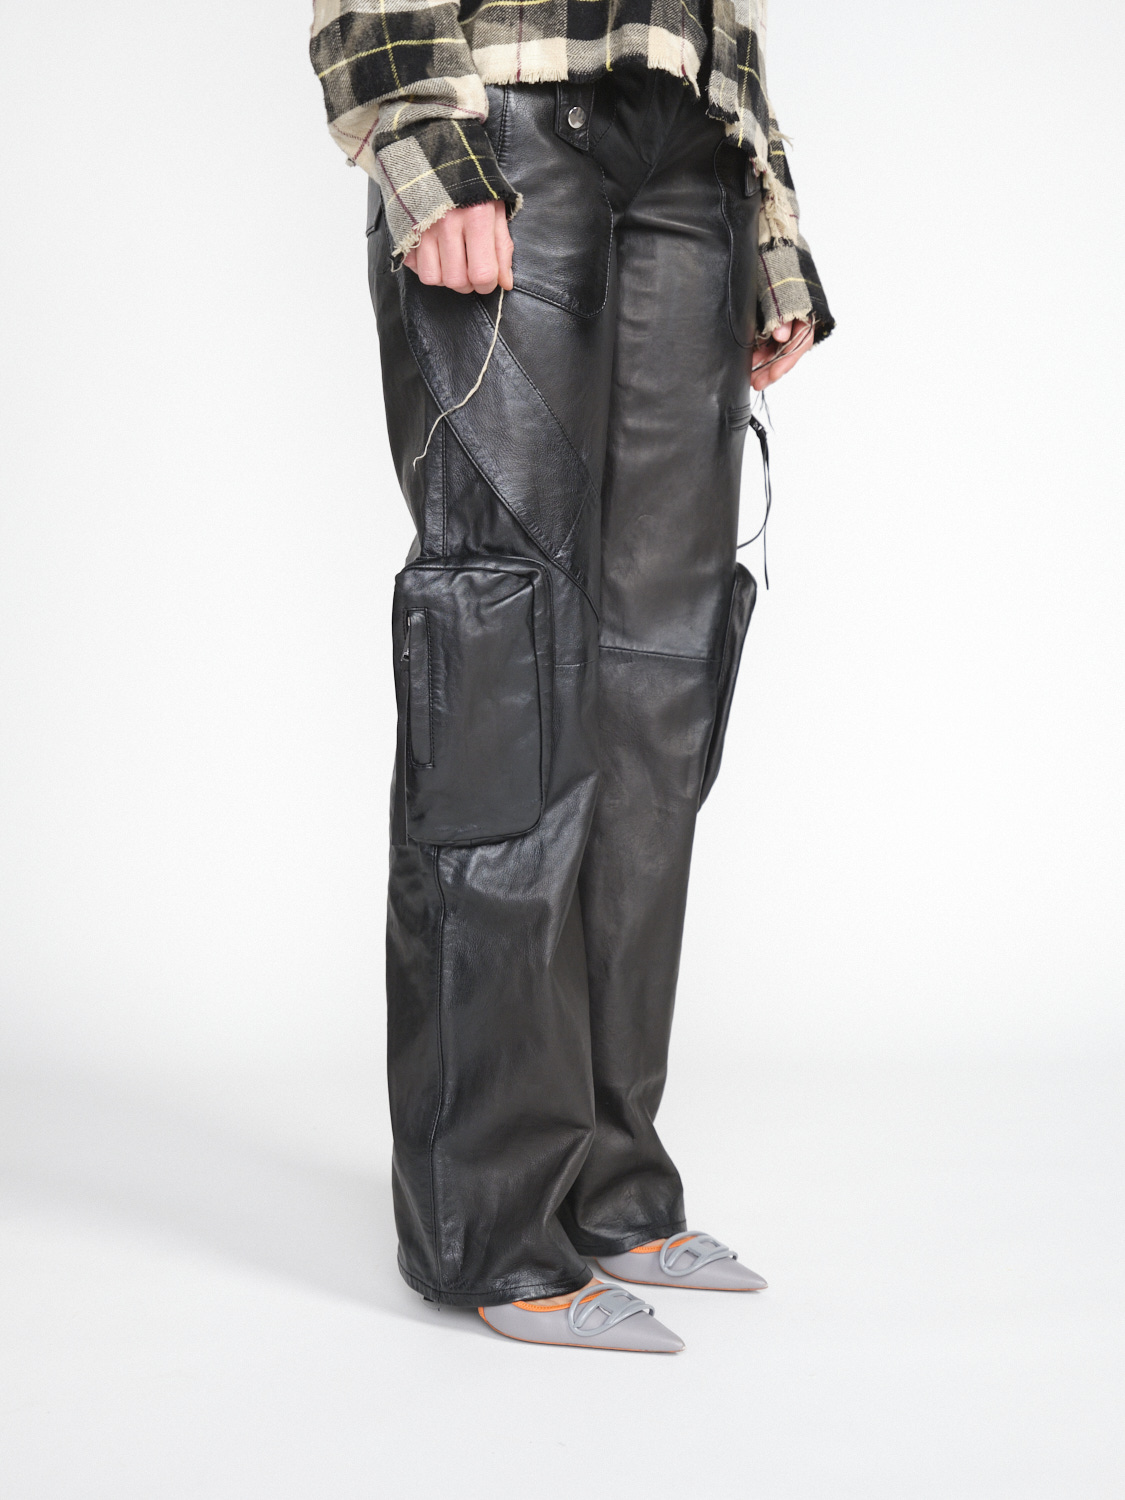 Blumarine Pantalone Pelle - leather pants with biker details  black 34